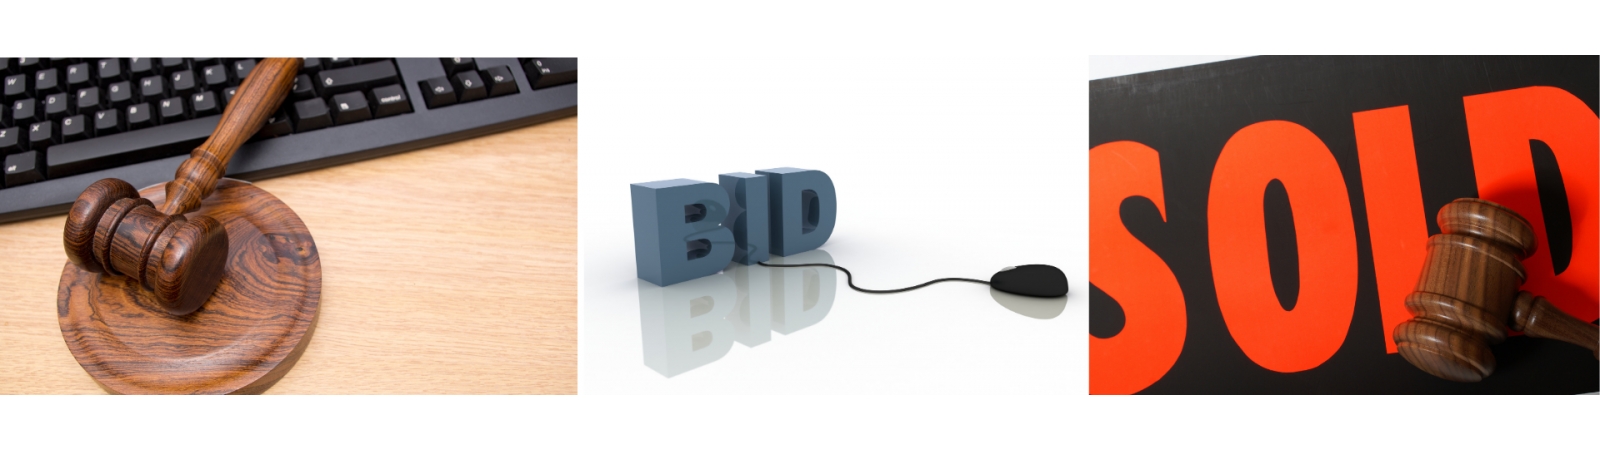 Blue Bridge Auctions, LLC | AuctionNinja